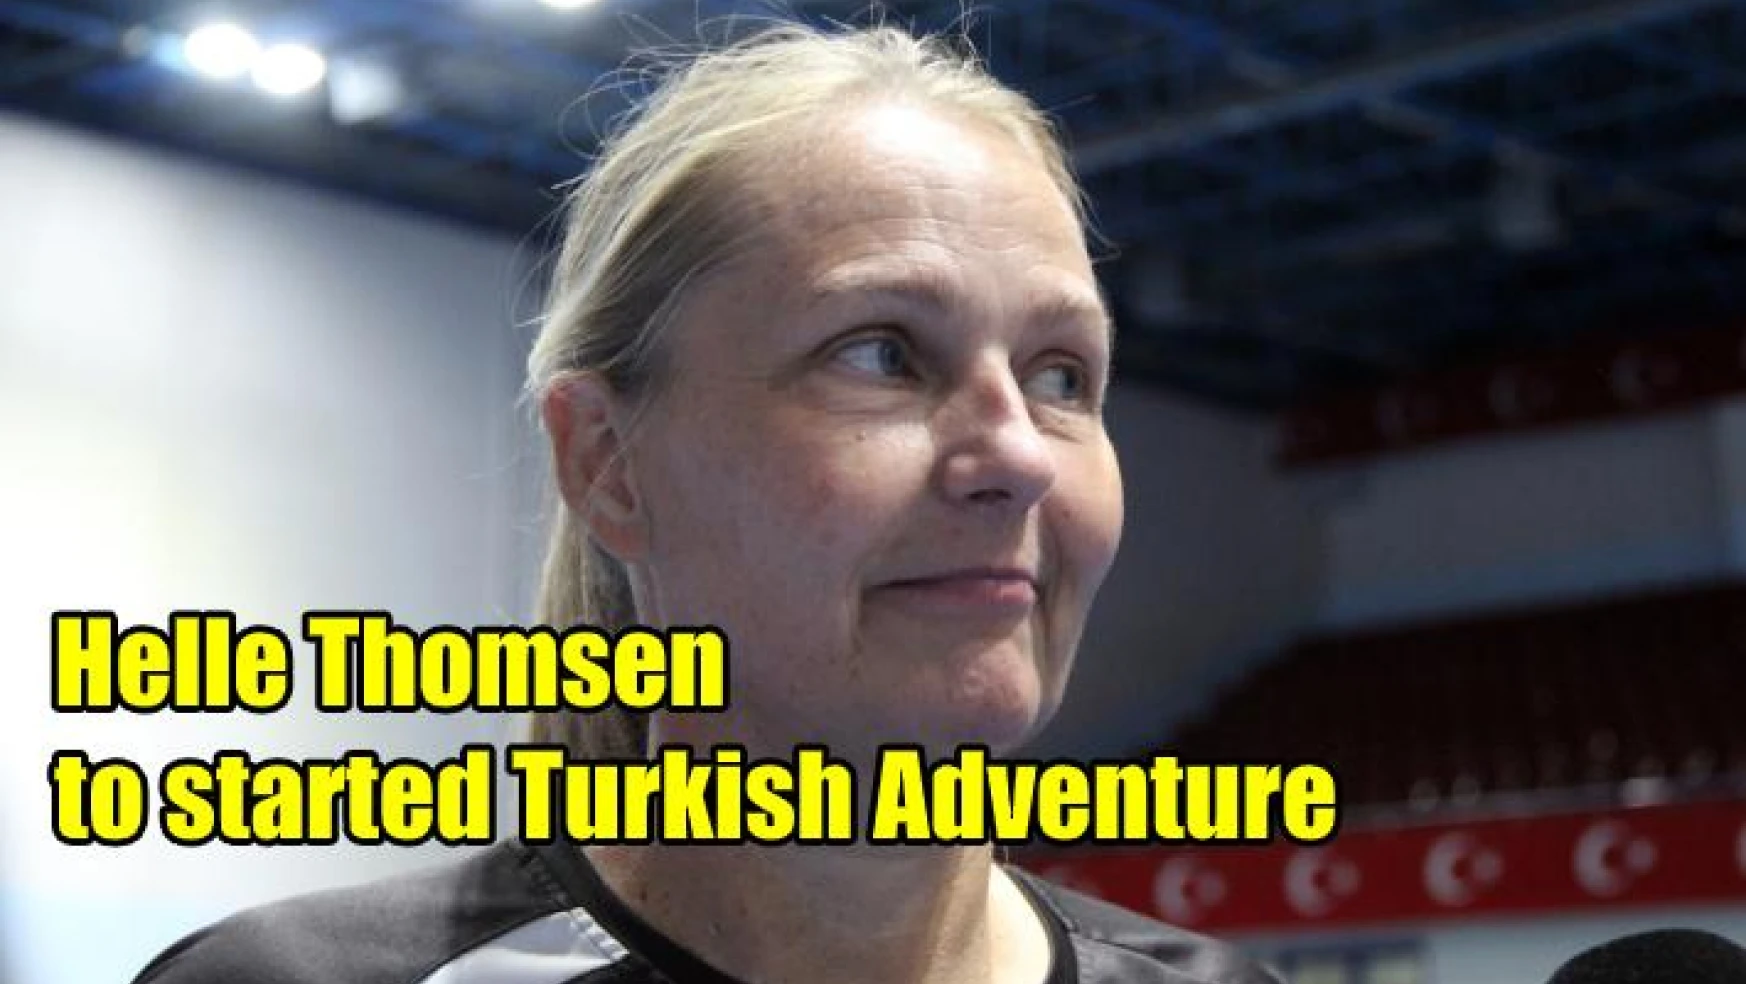 Helle Thomsen to started Turkish Adventure